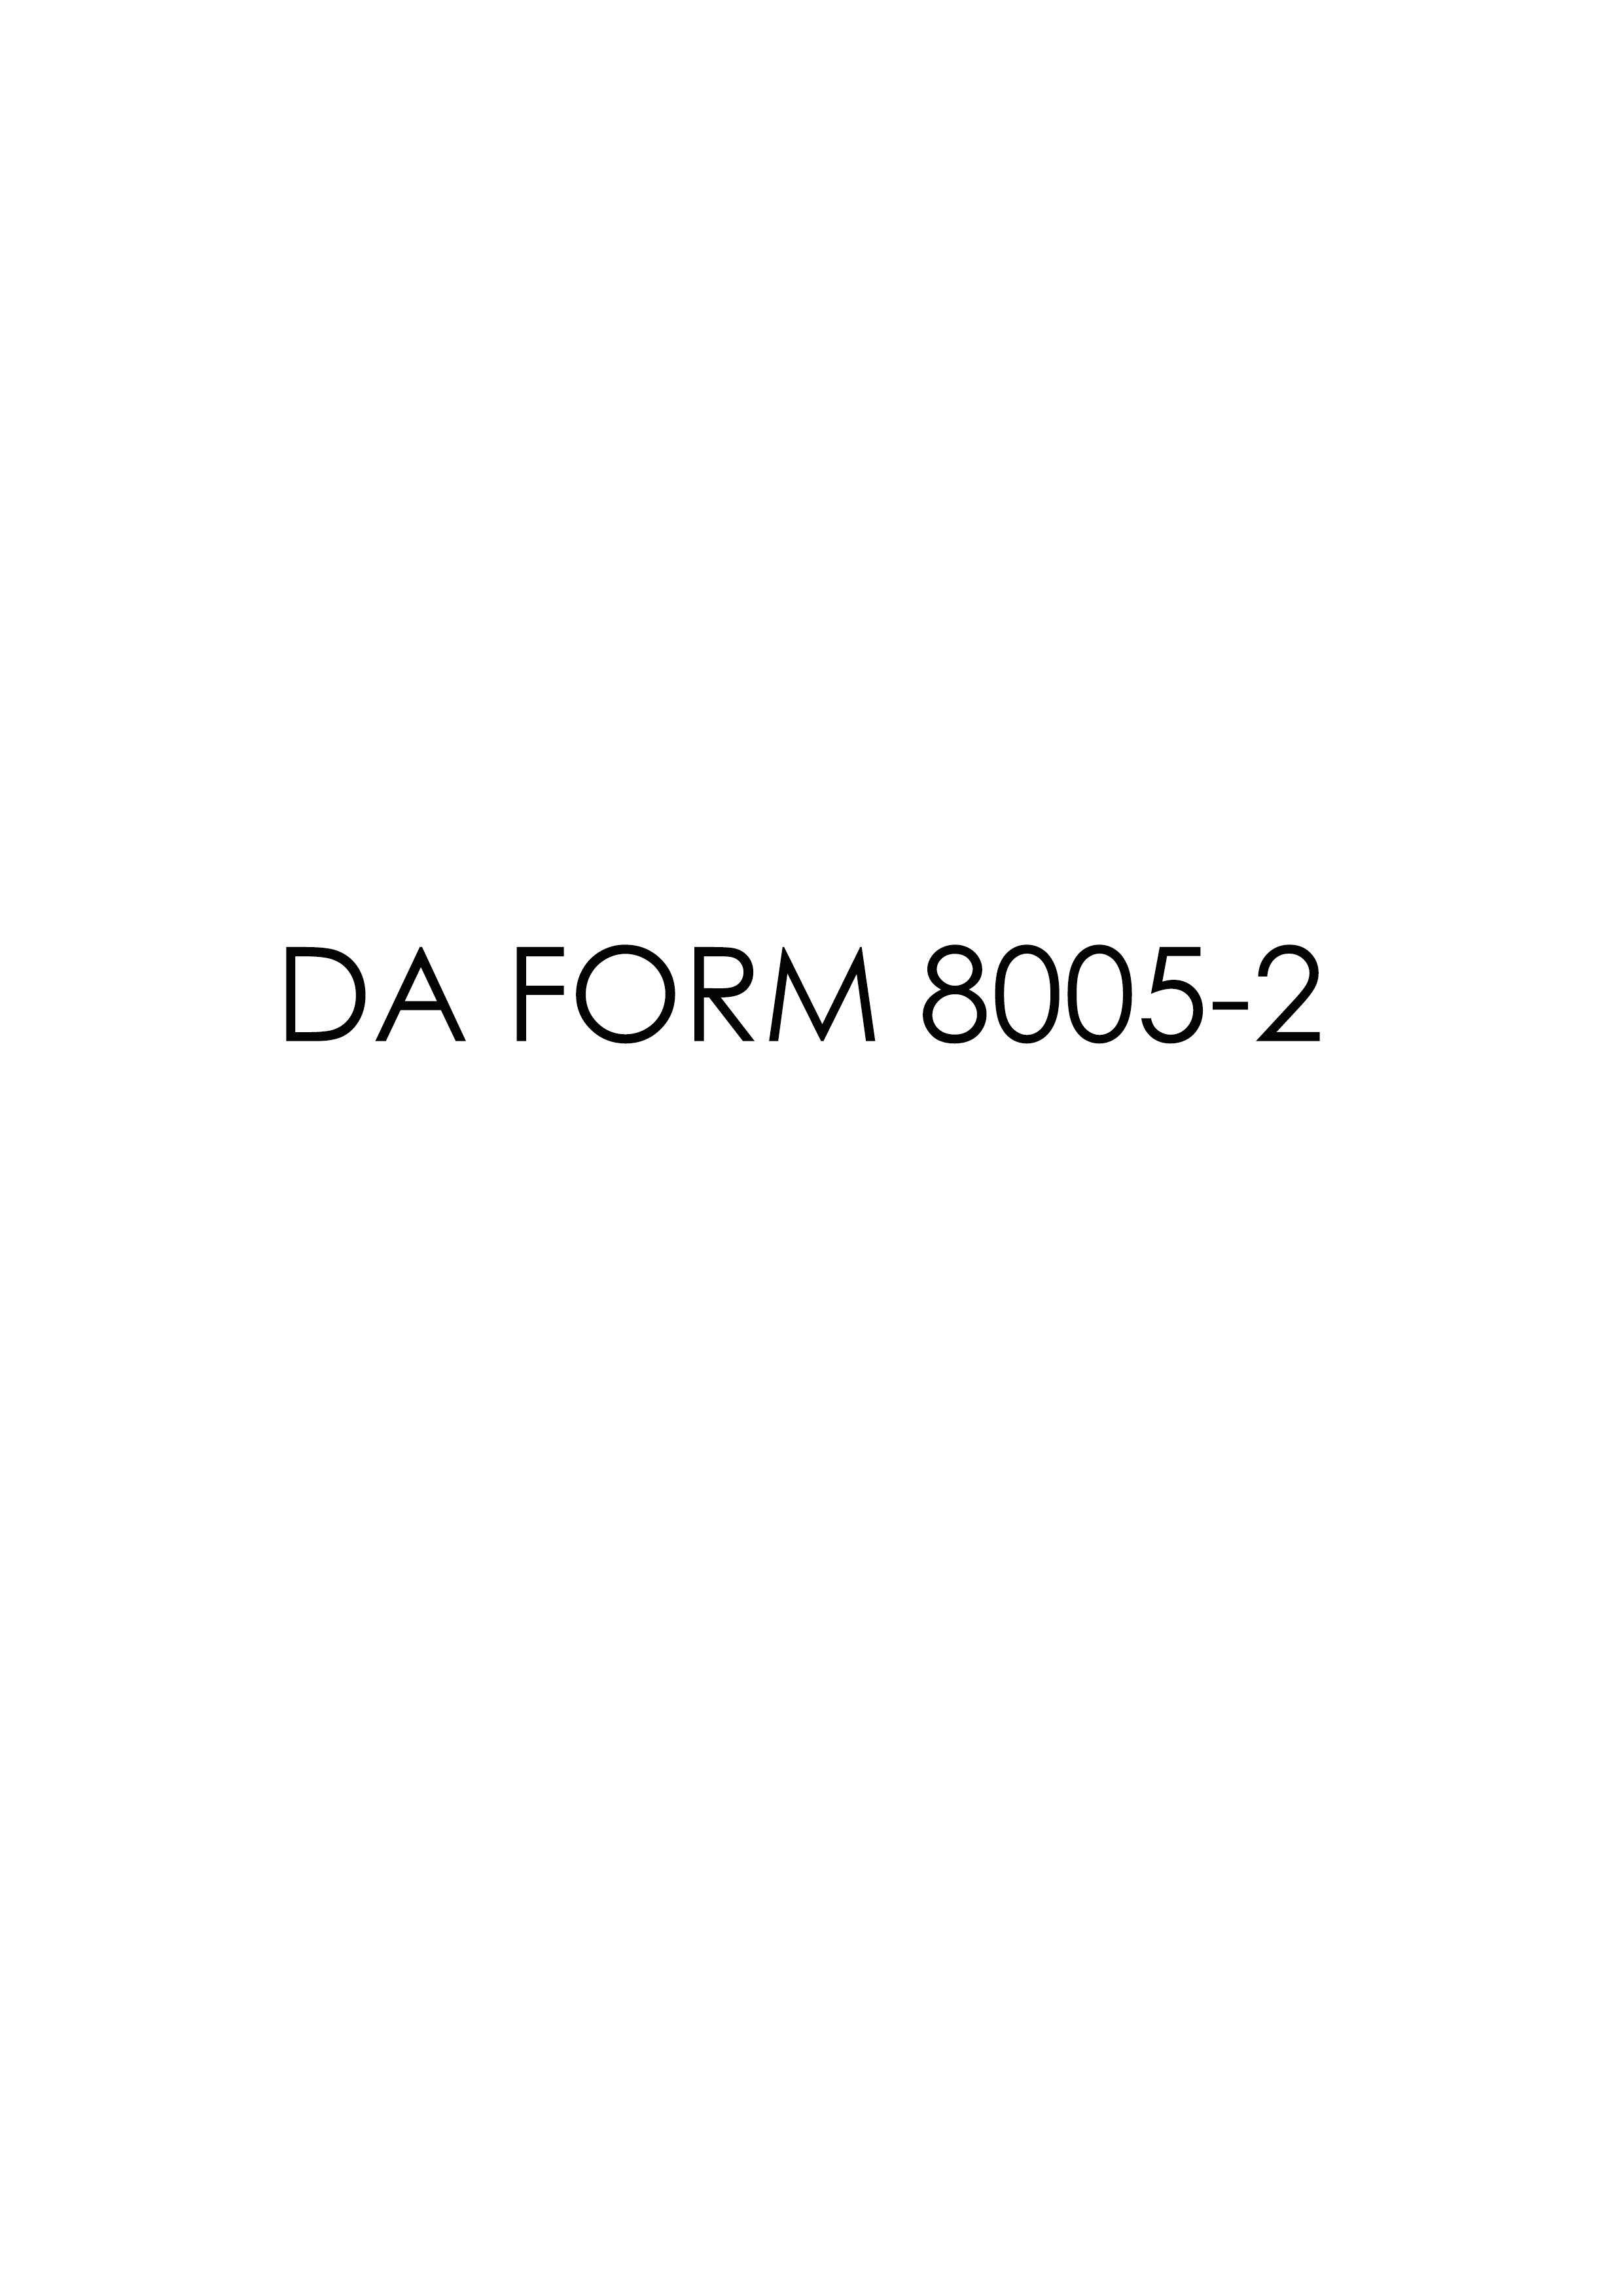 Download da 8005-2 Form